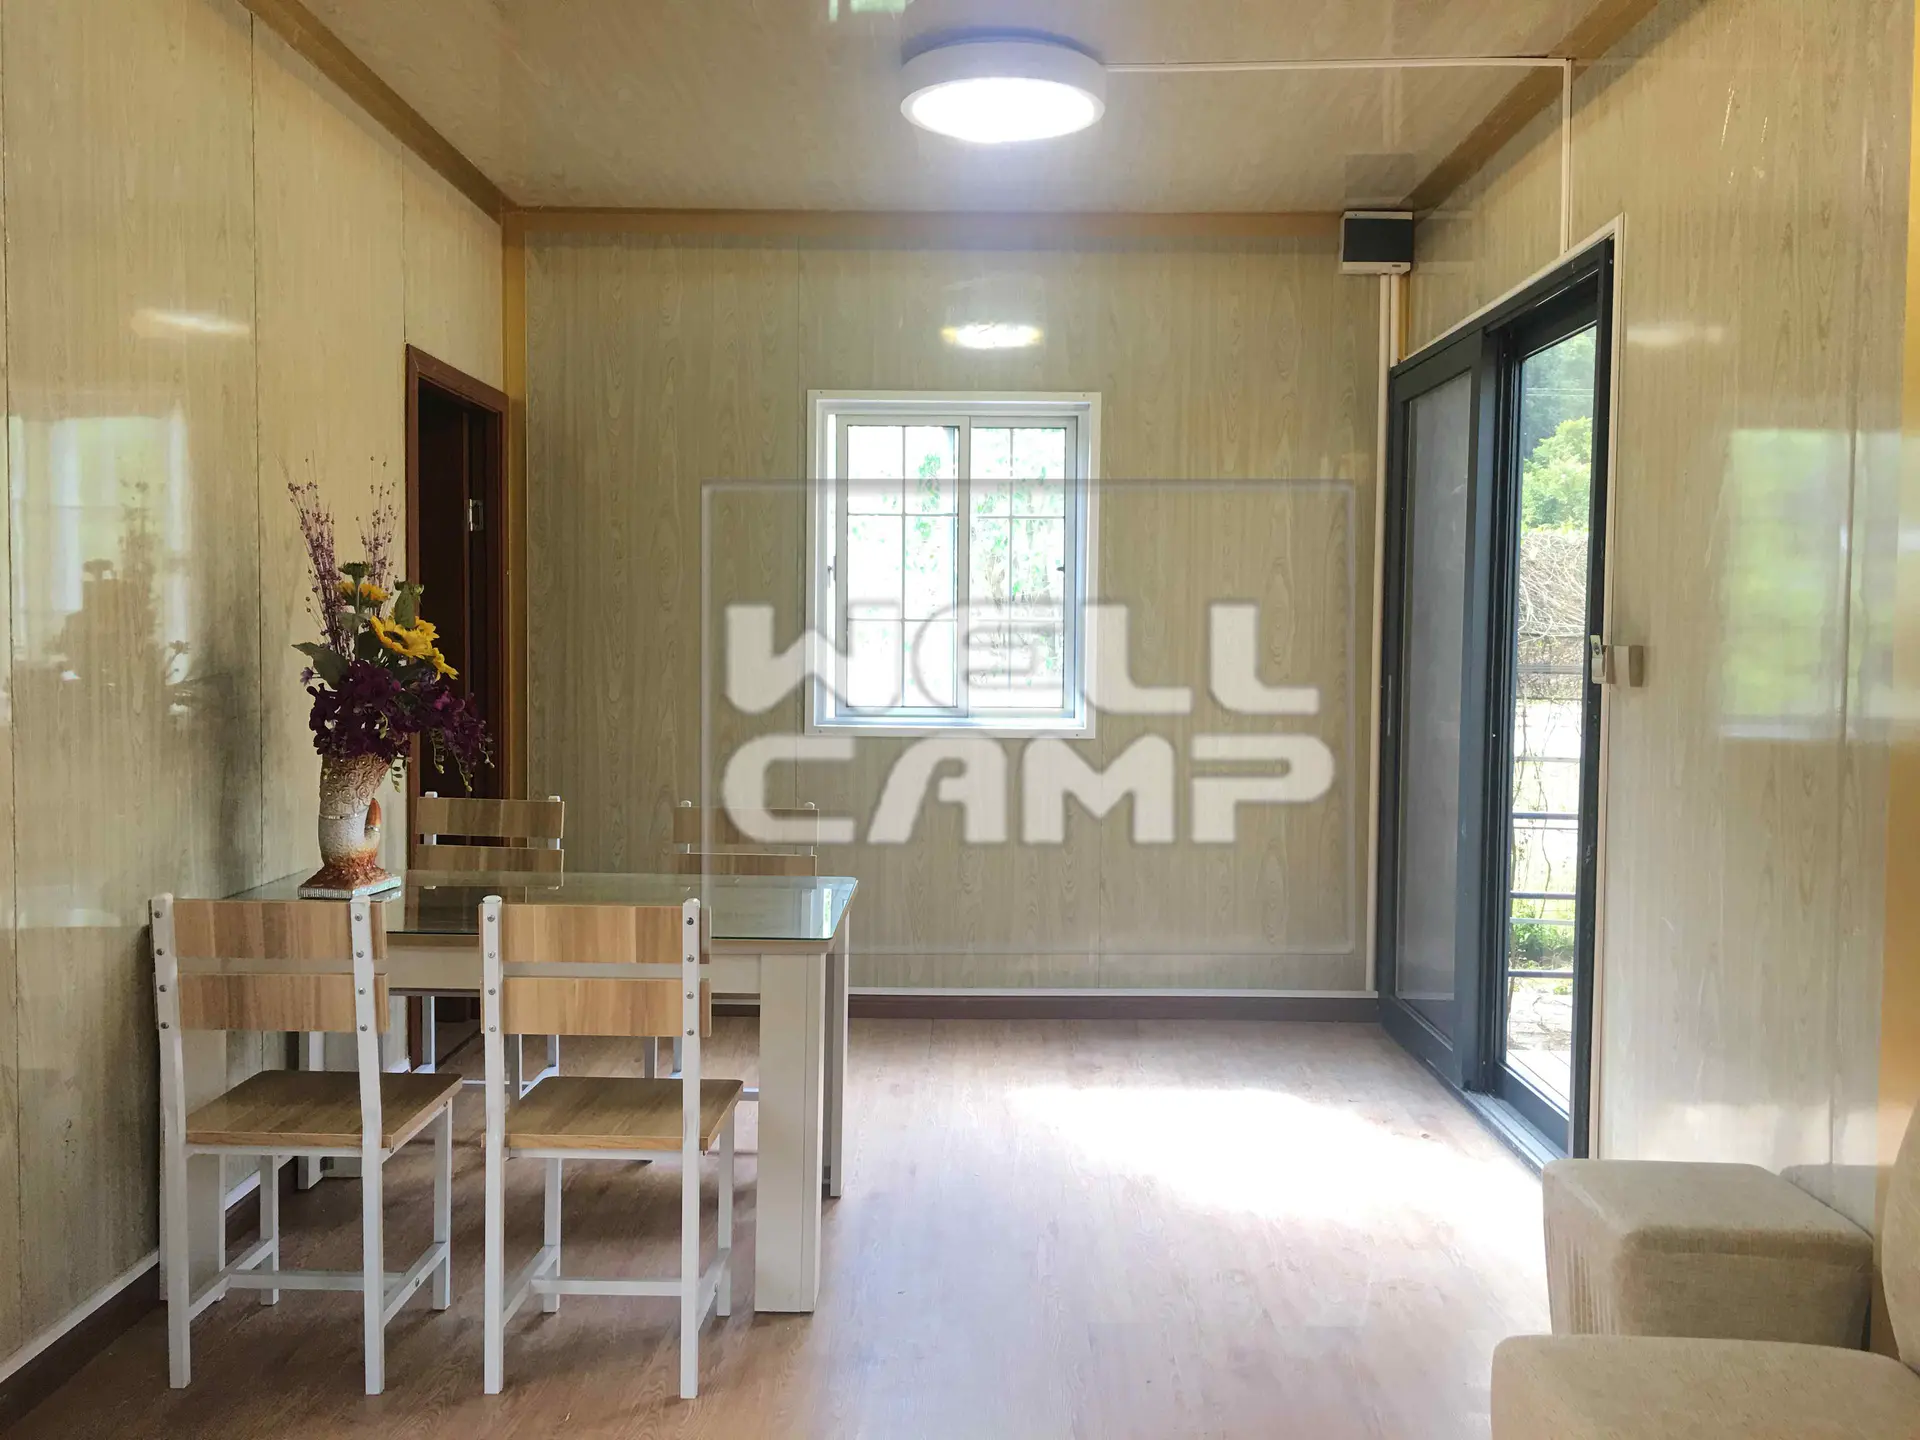 Wellcamp ripple detachable container villa for vocation village